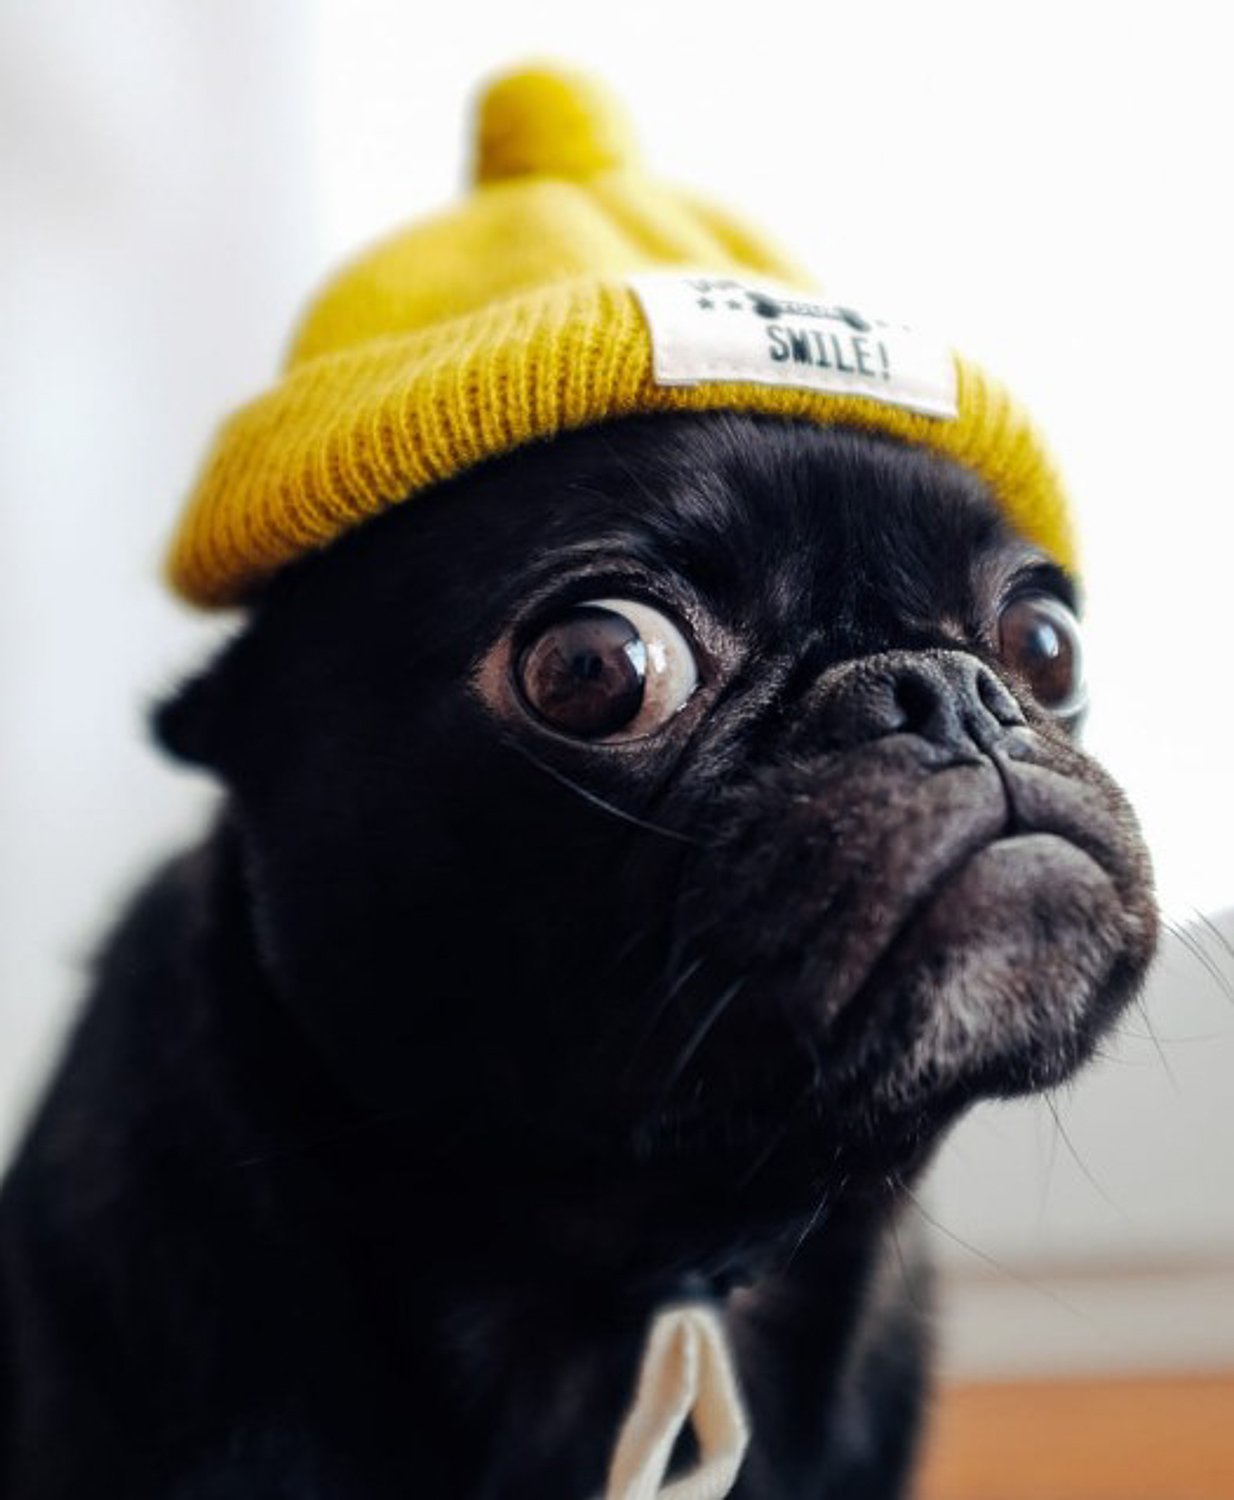 A  close up headshot of a black pug dog wearing a yellow beanie 